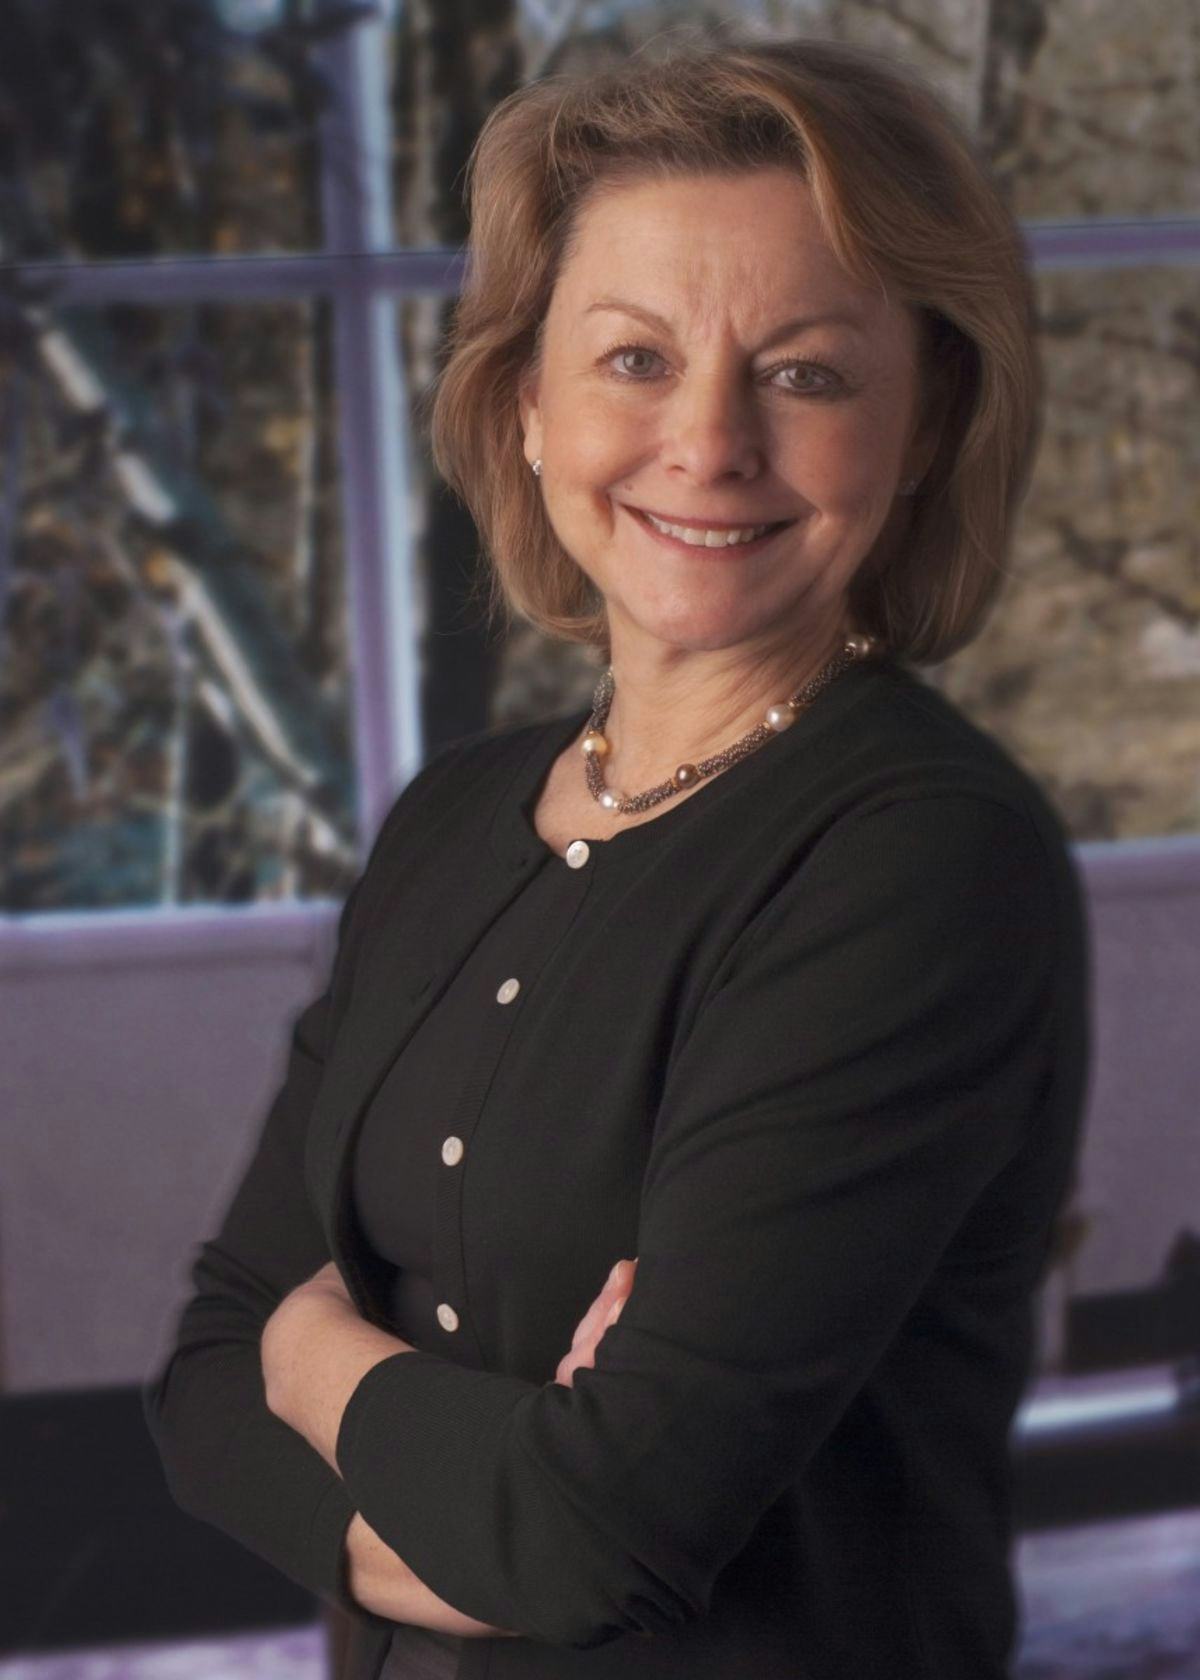 Linda S. Sanford, IBM Senior Vice President, Enterprise Transformation